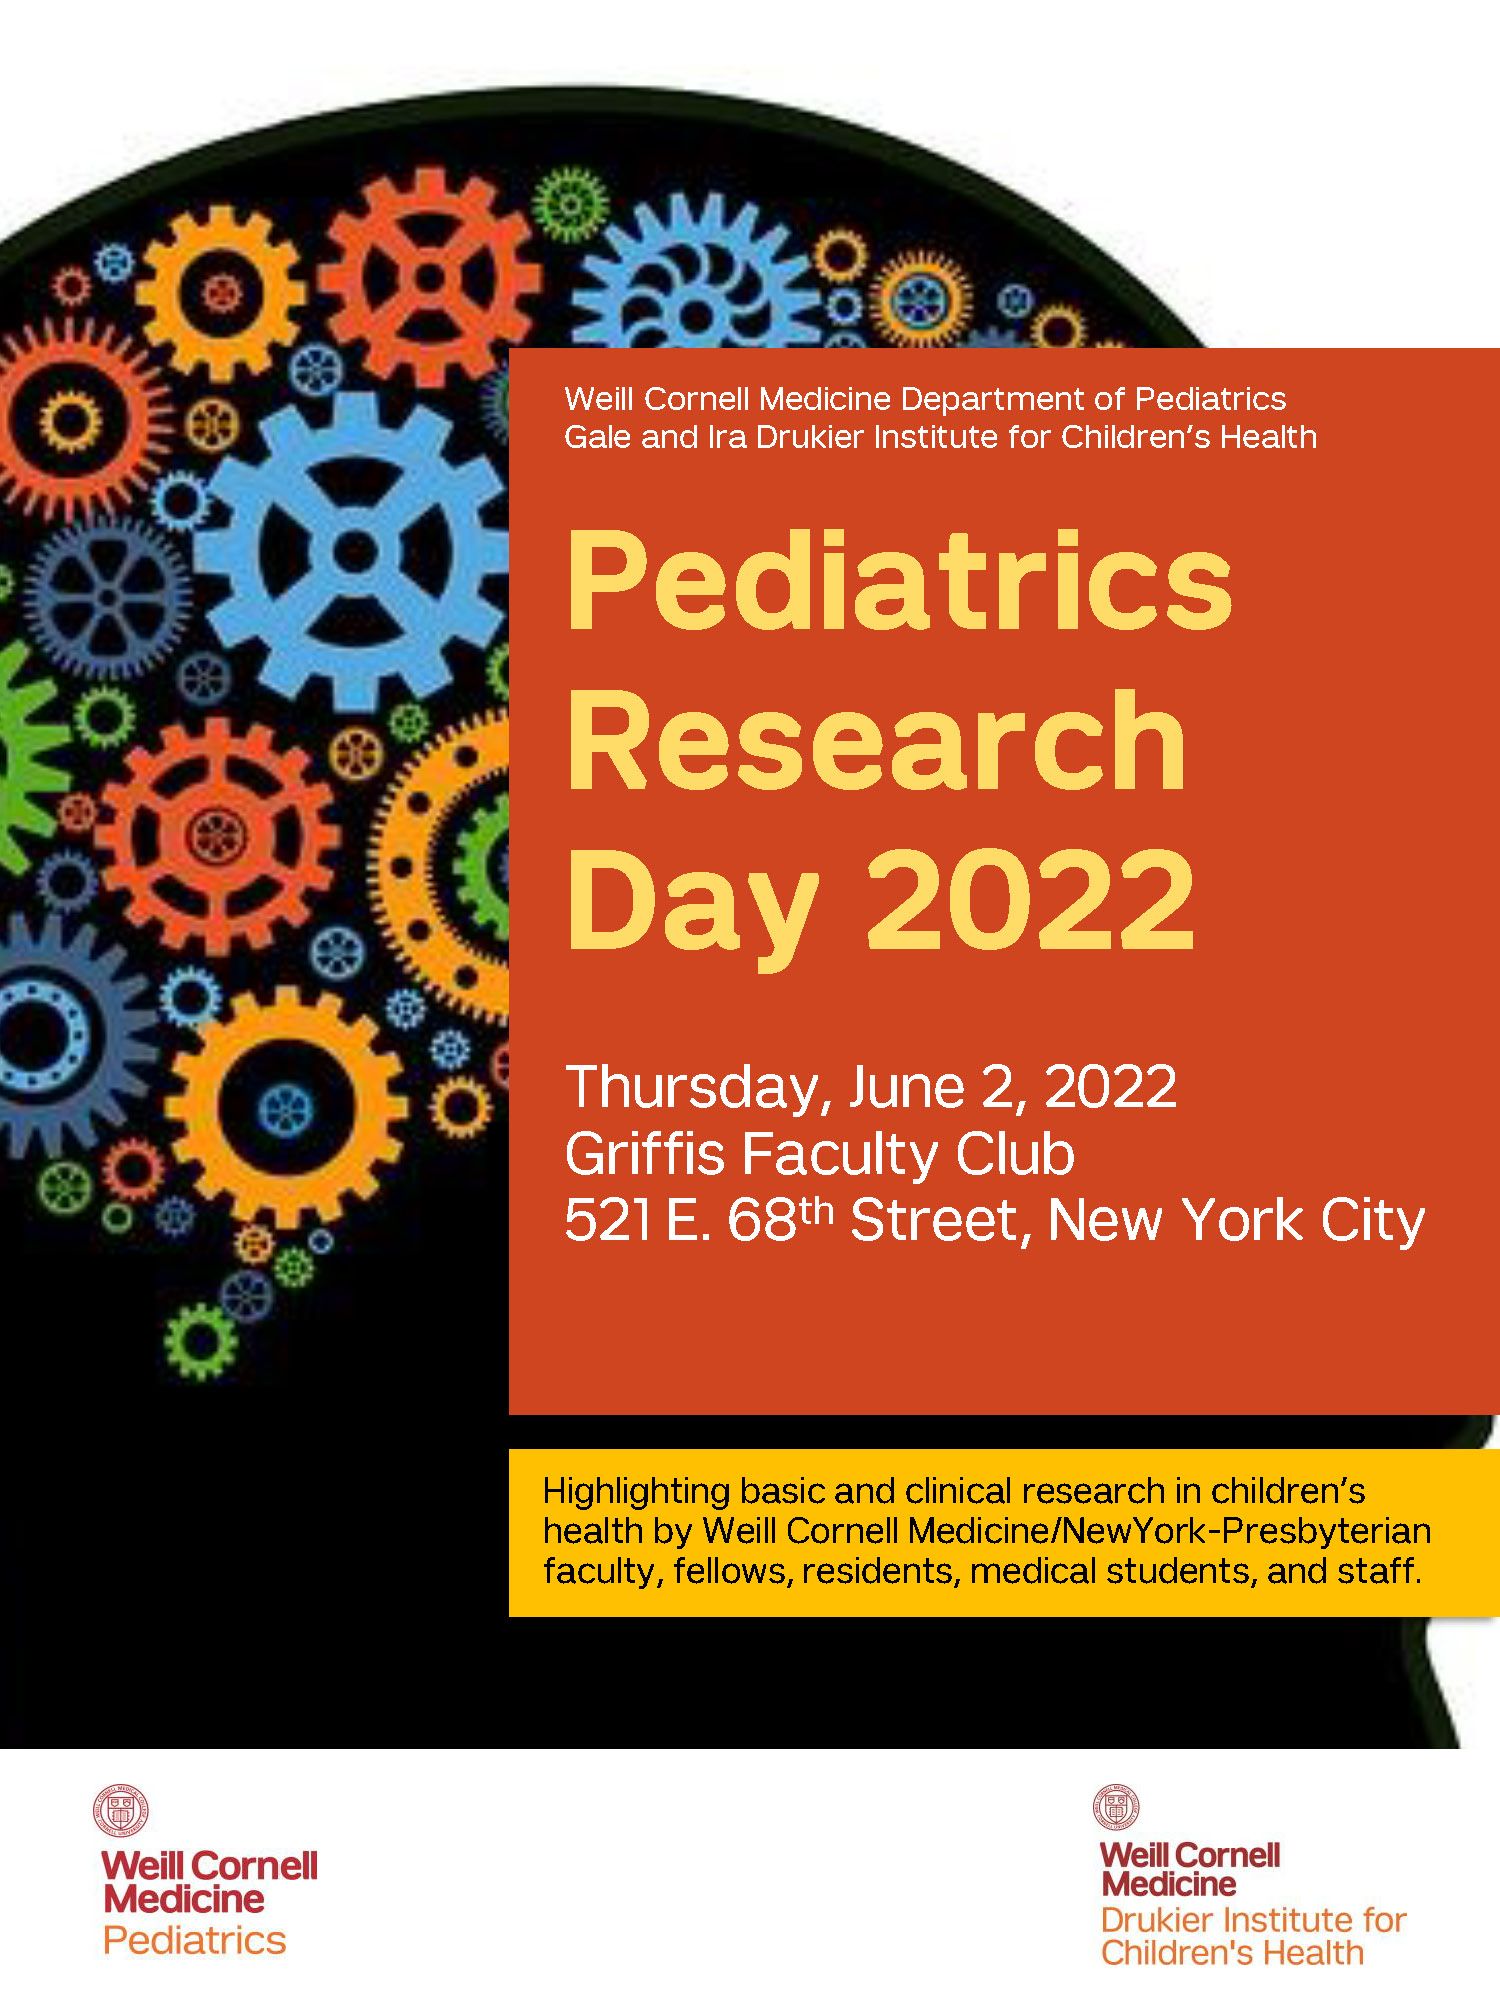 Pediatrics Research Day flyer